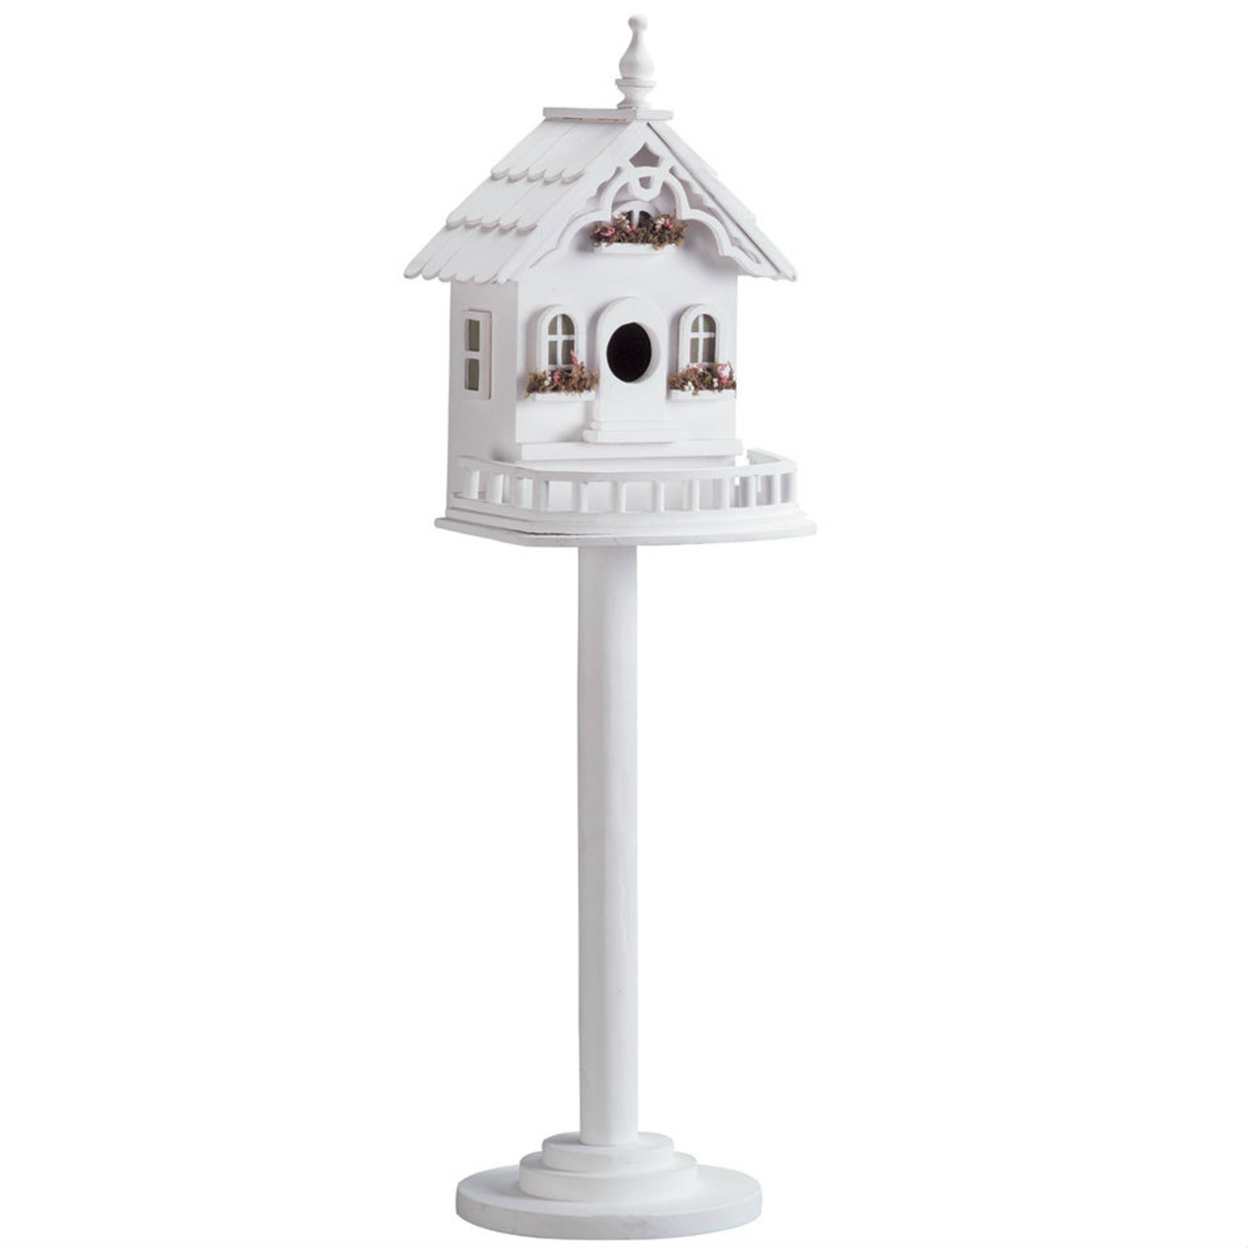 Home Decorative Victorian Pedestal Bird House - White - image 2 of 6